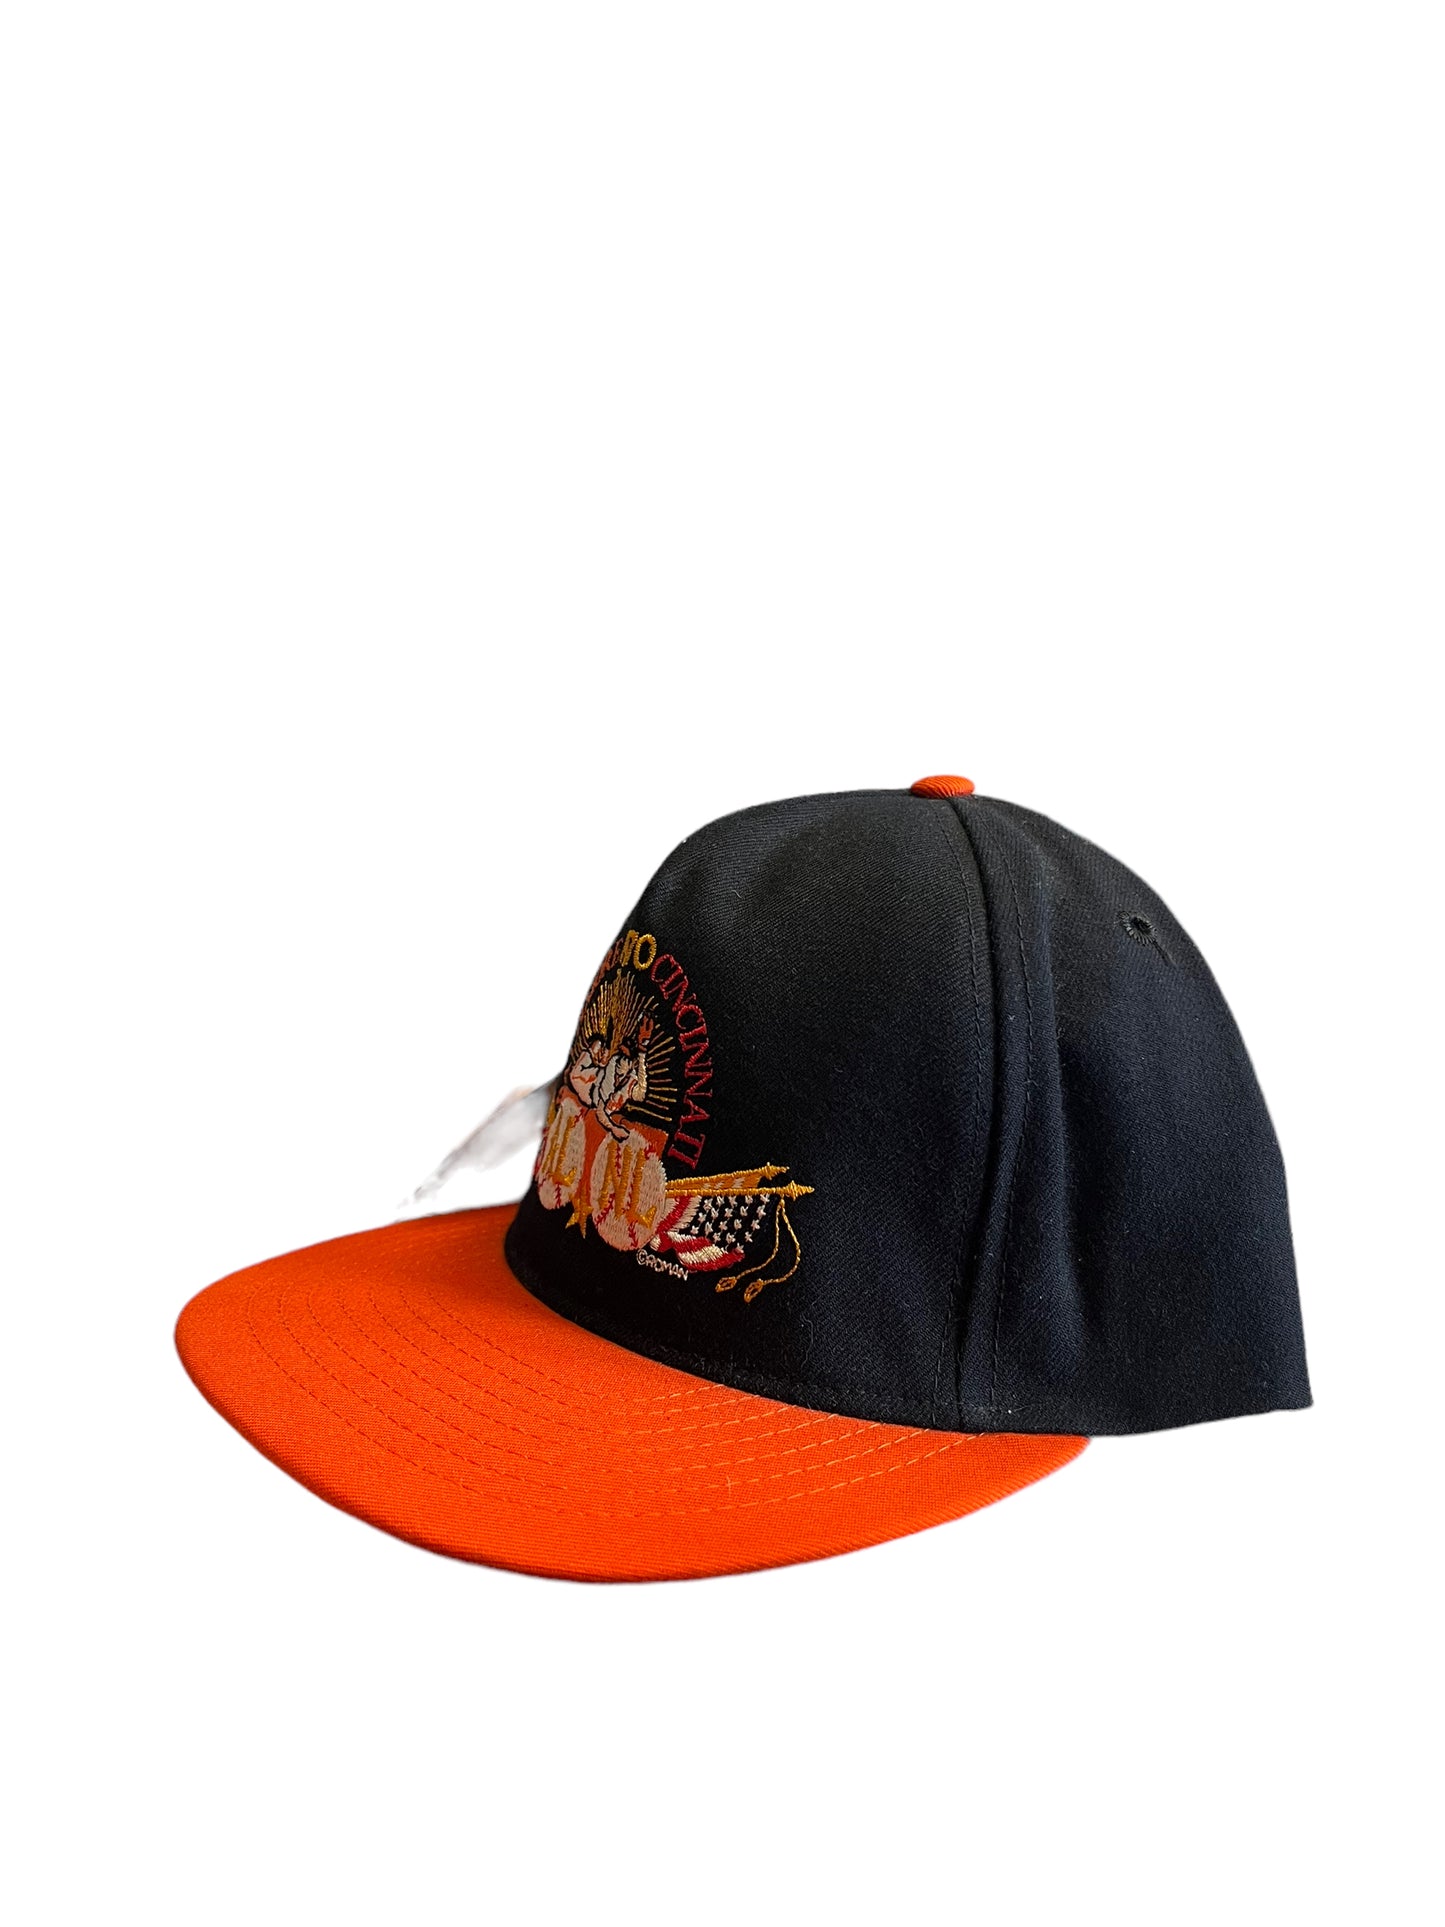 Vintage World Series SnapBack Hat Brand New